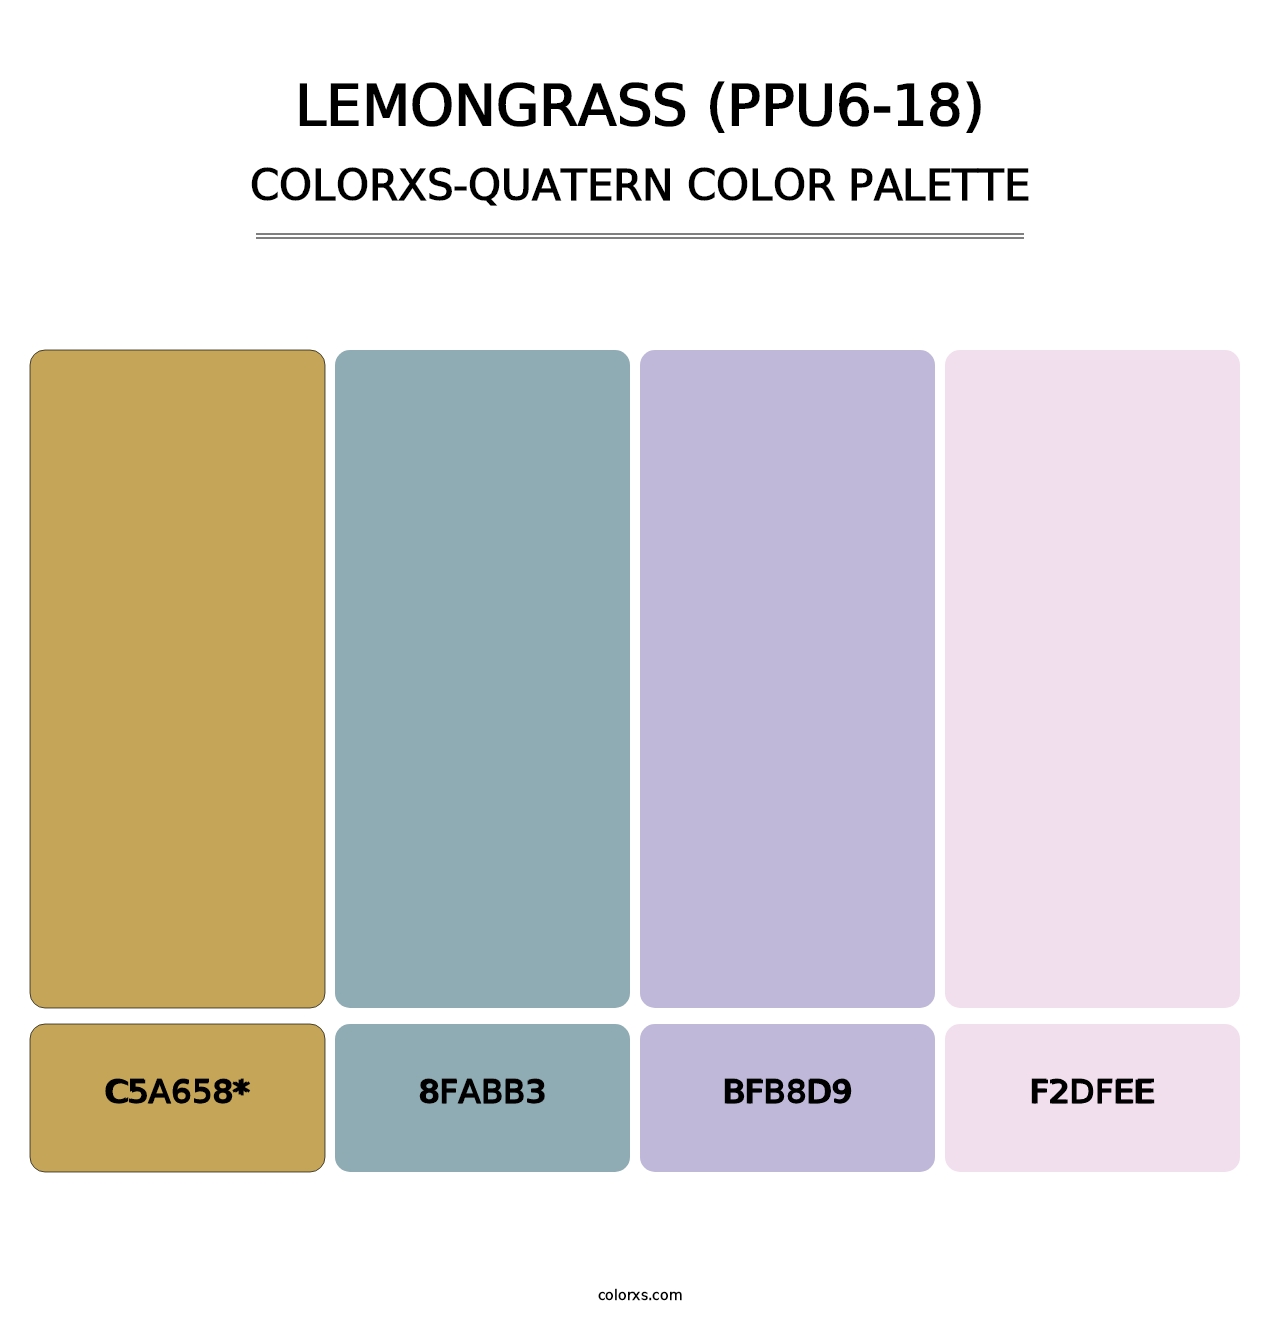 Lemongrass (PPU6-18) - Colorxs Quatern Palette